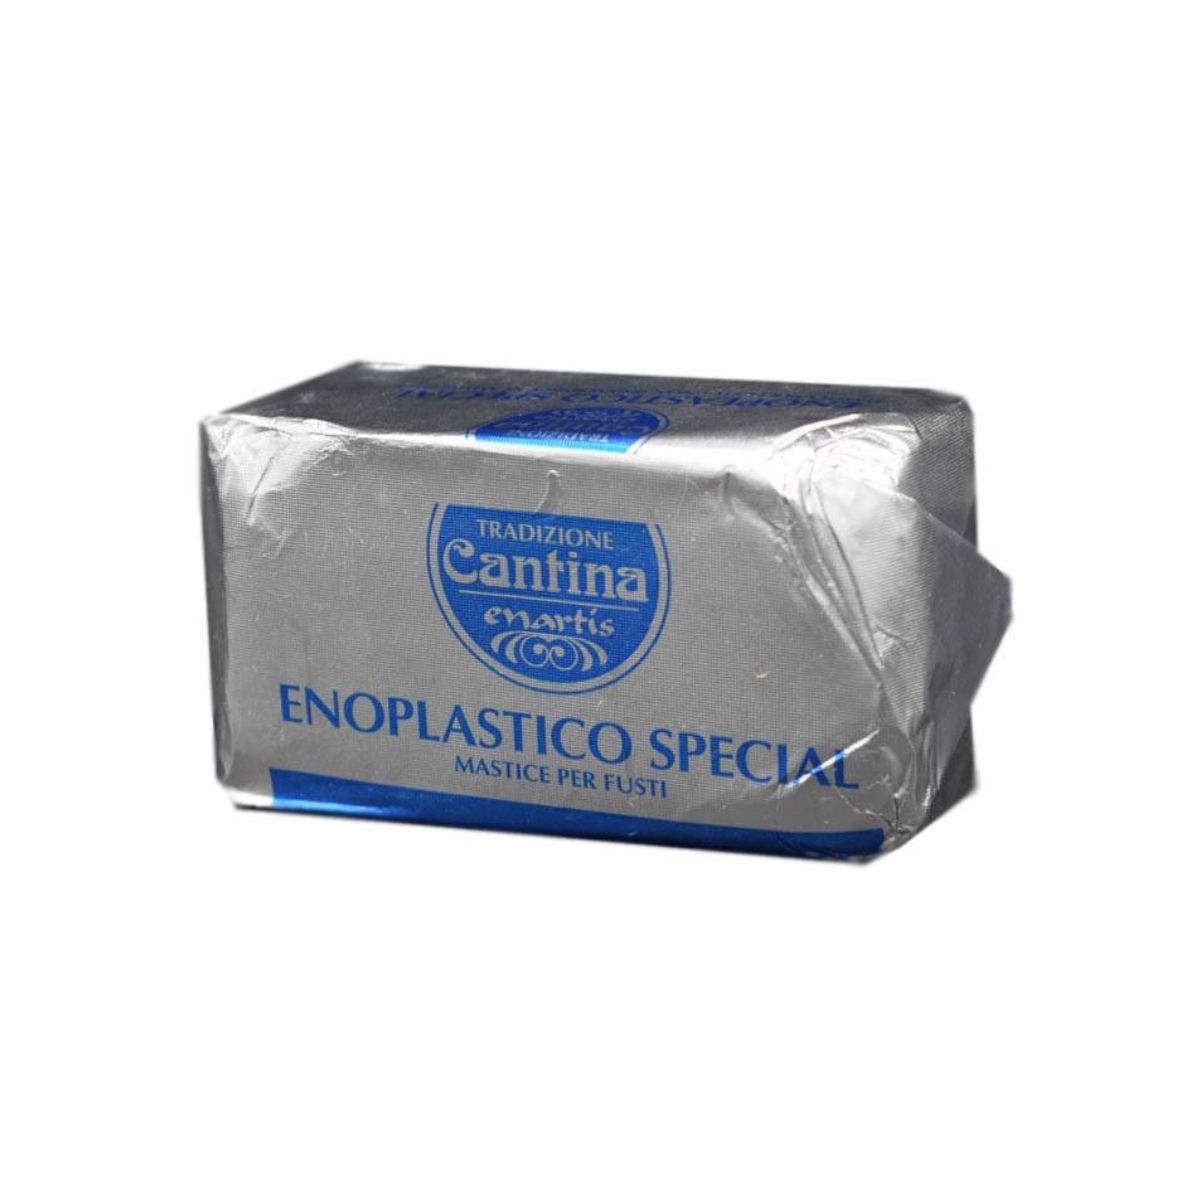 Vinificatie (Oenologie) - Mastic enoplastic special pentru butoaie, 0.5 kilograme, hectarul.ro